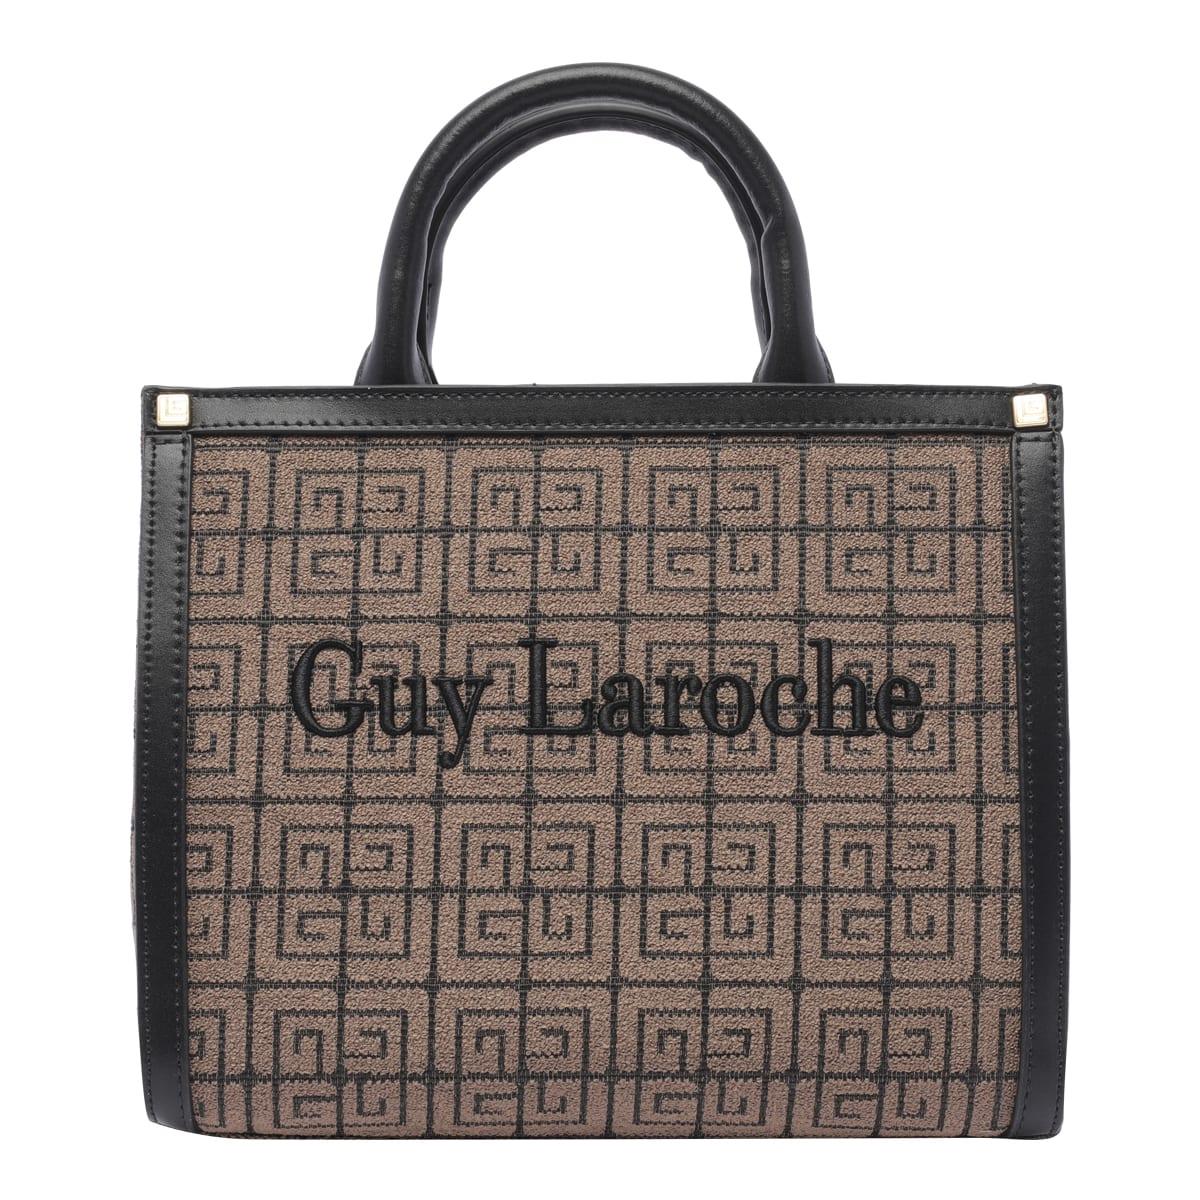 Guy Laroche Logo Hand Bag in Brown